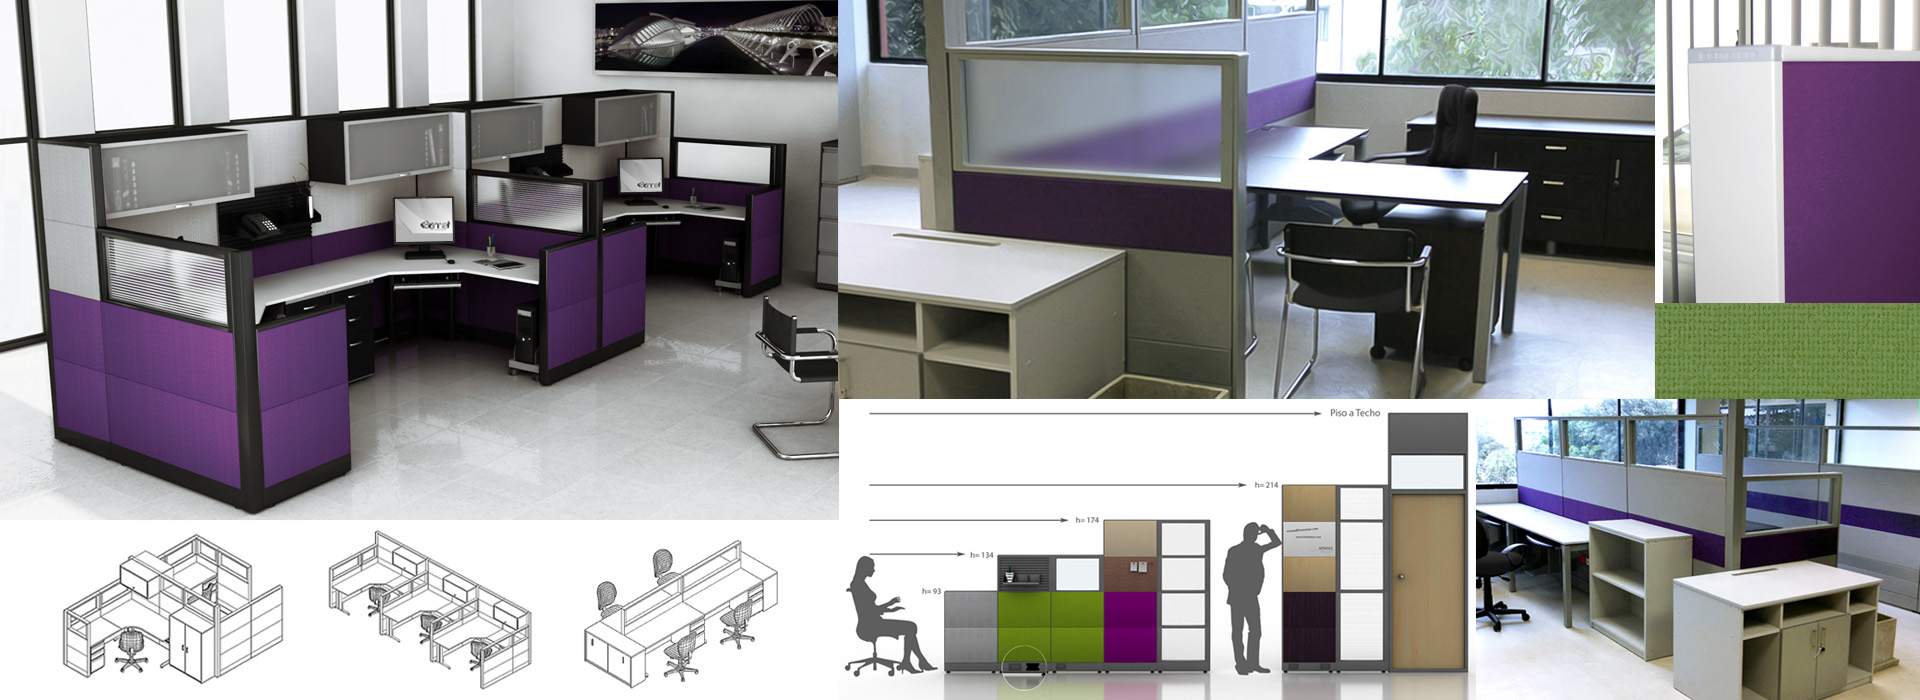 paneles-y-divisorios-para-oficinas-modernas